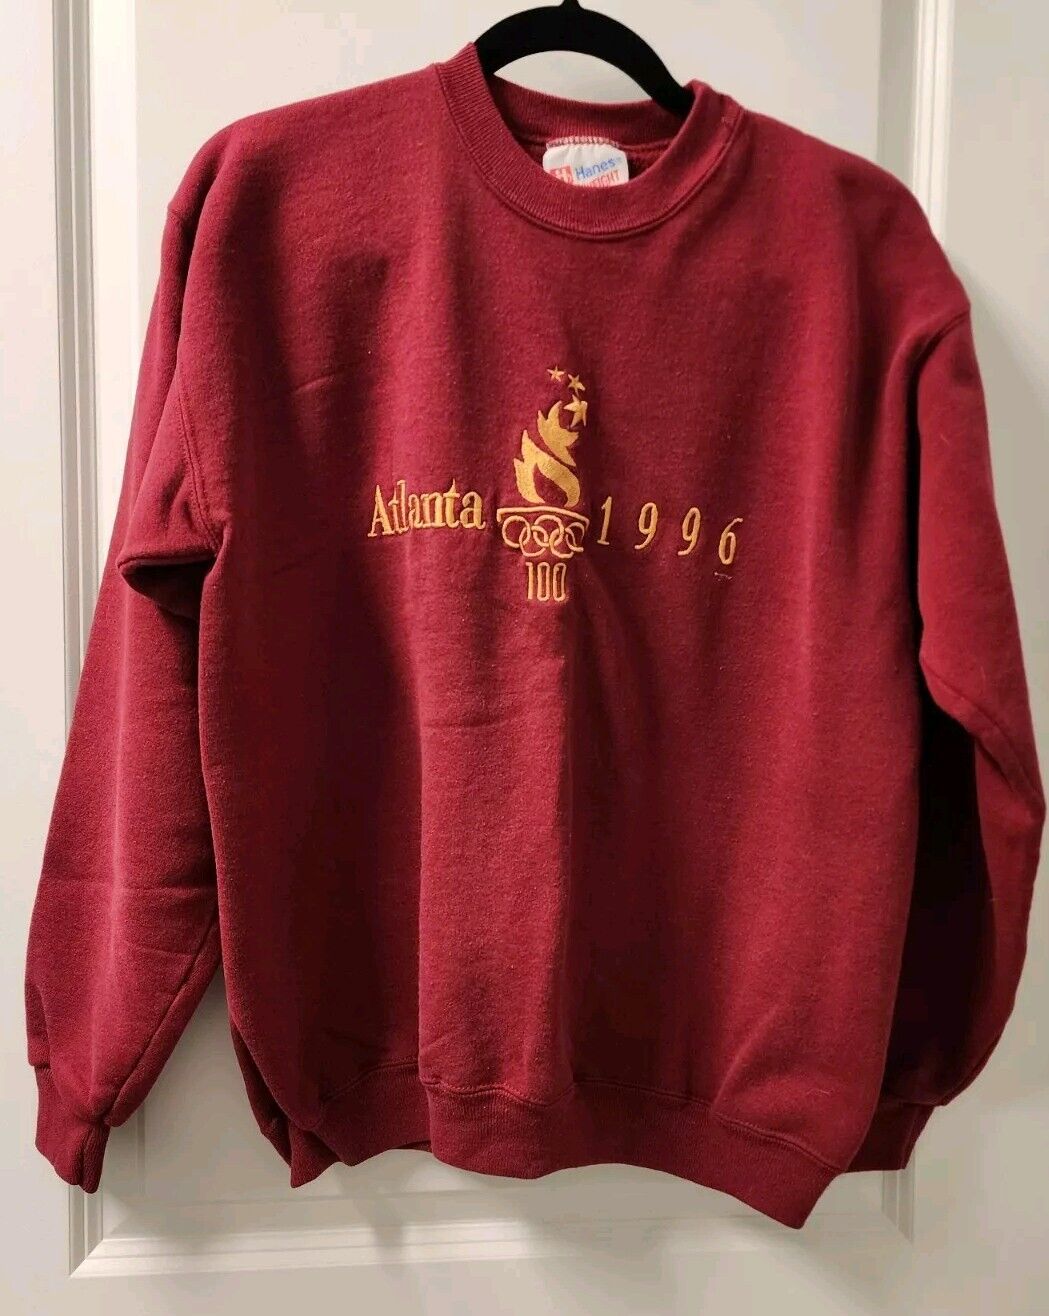 Vintage 1996 Atlanta Olympics Red Embroidered Crewneck Sweatshirt Size M